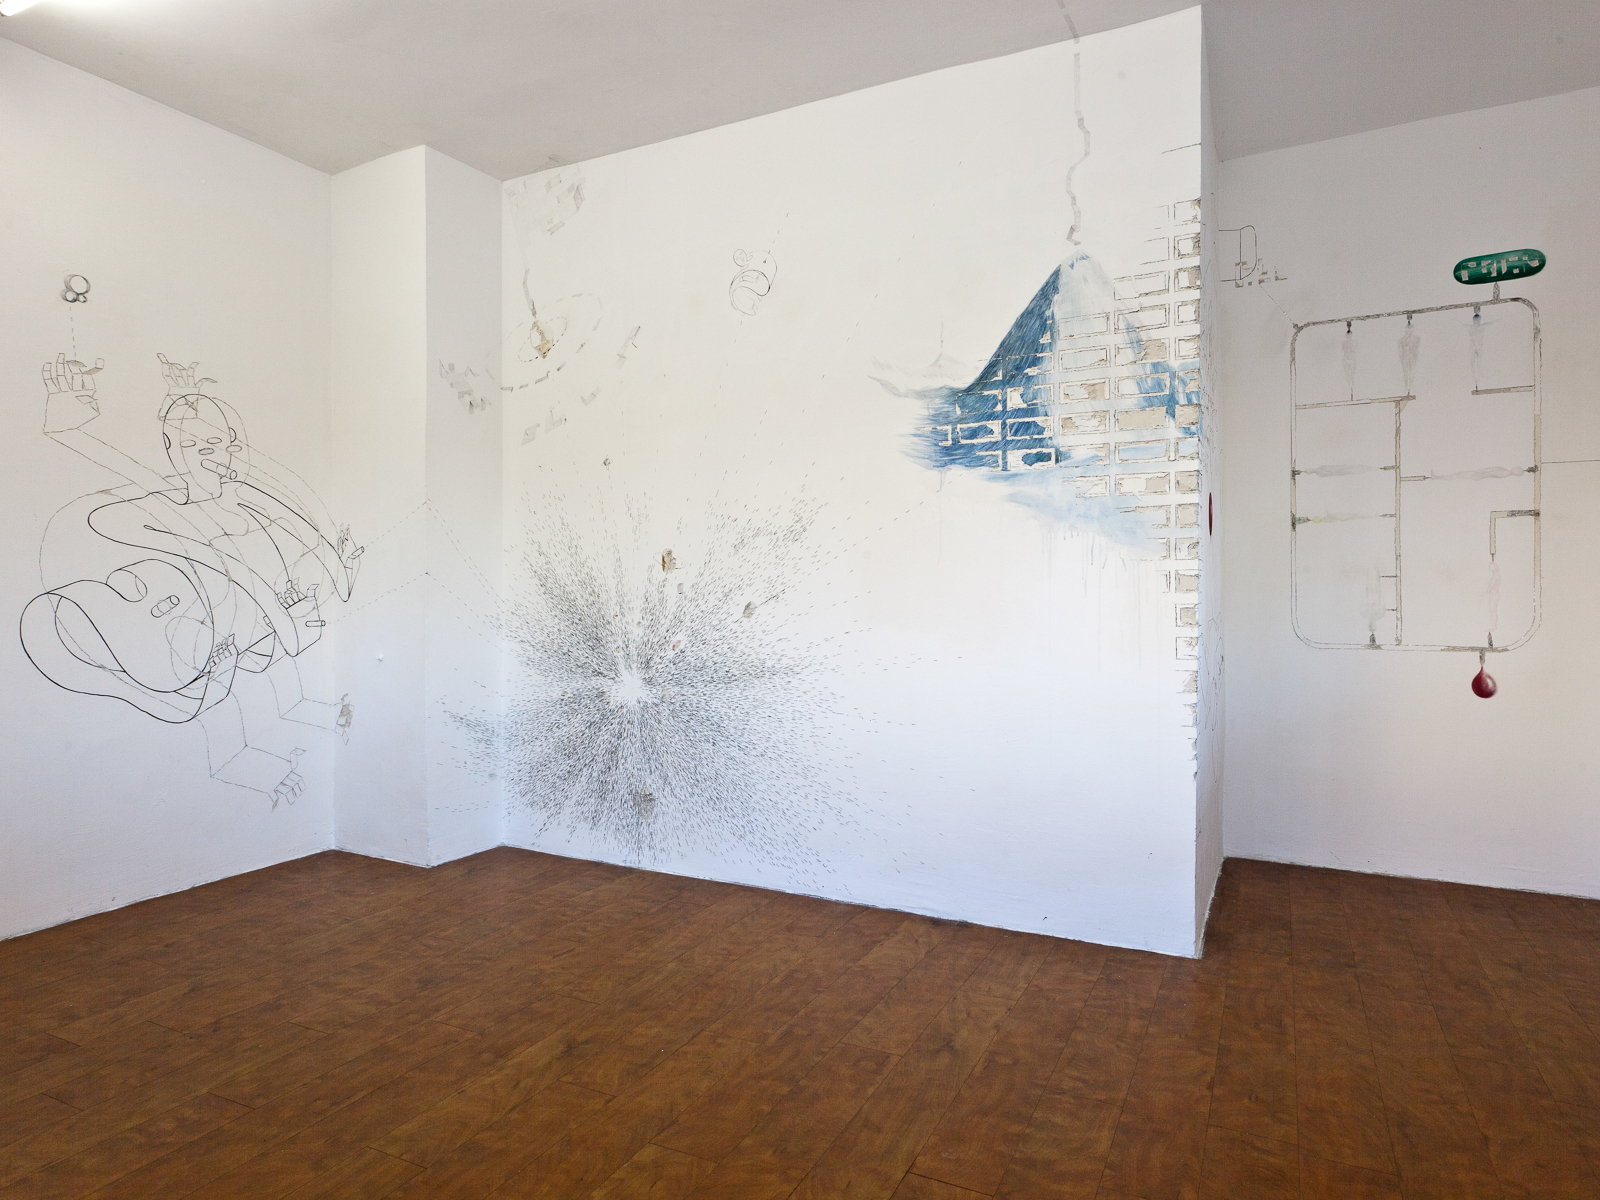 »Neuronales Gewitter«, 2011, wall drawing, 800 x 260 cm